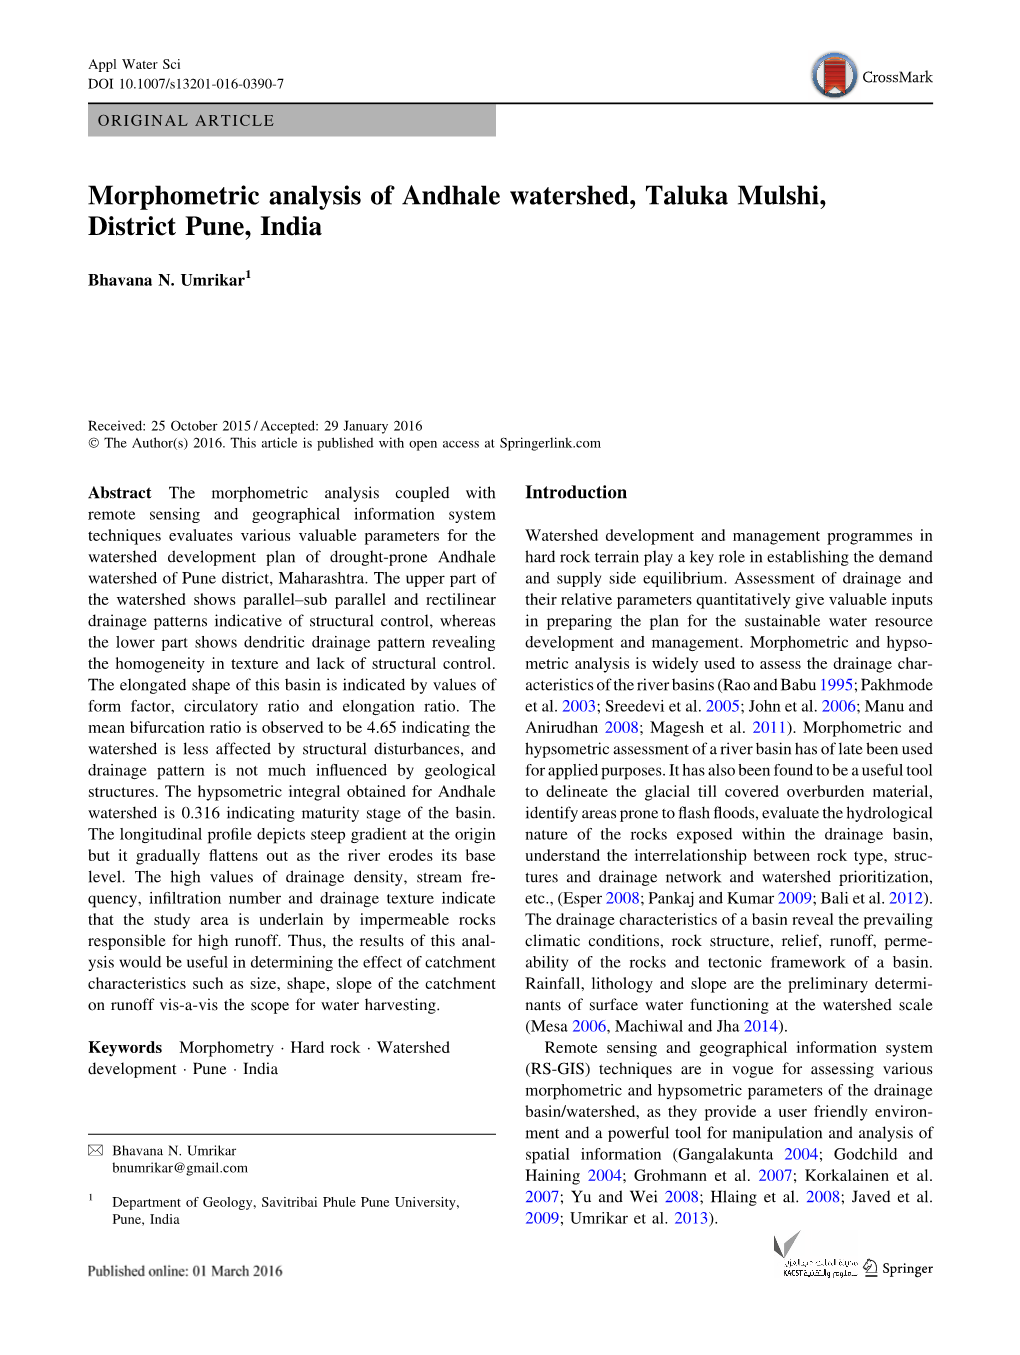 Morphometric Analysis of Andhale Watershed, Taluka Mulshi, District Pune, India